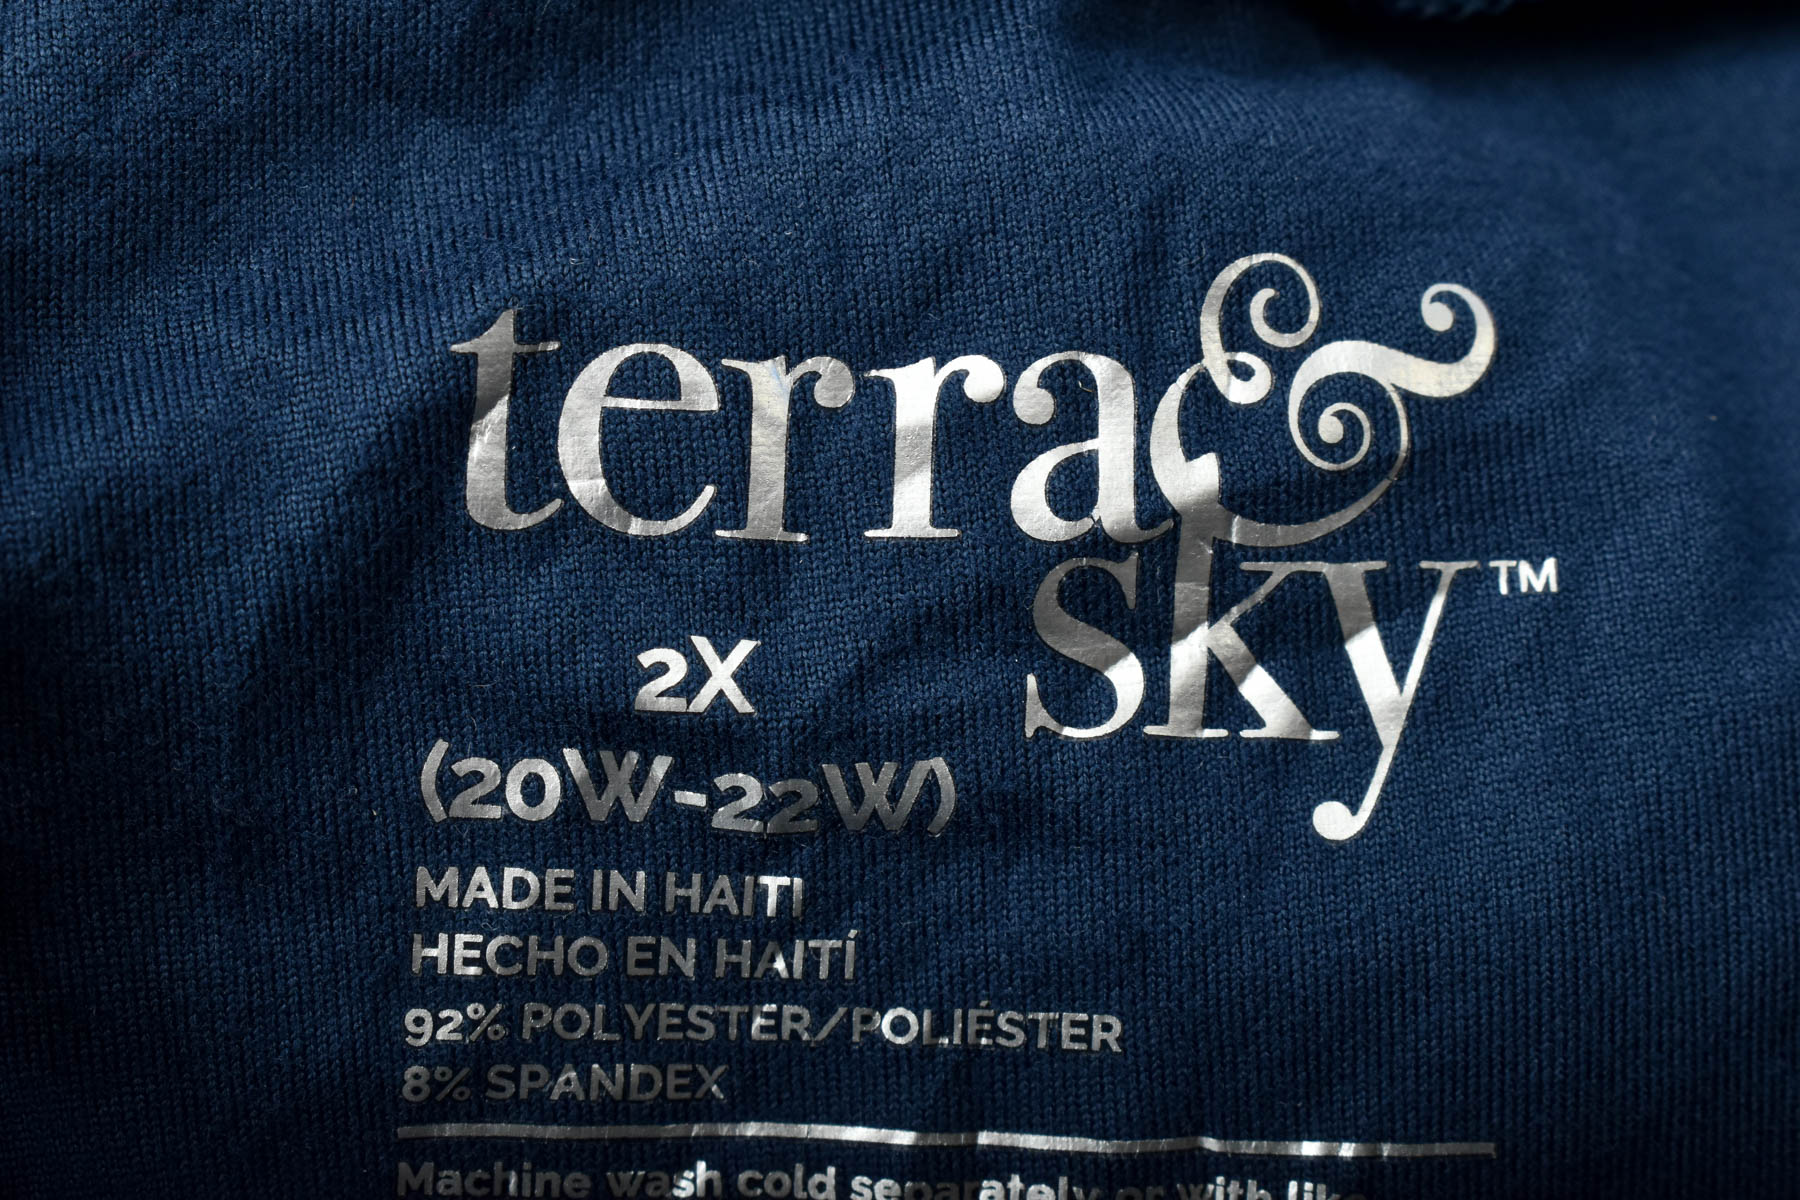 Leggings - Terra sky - 2